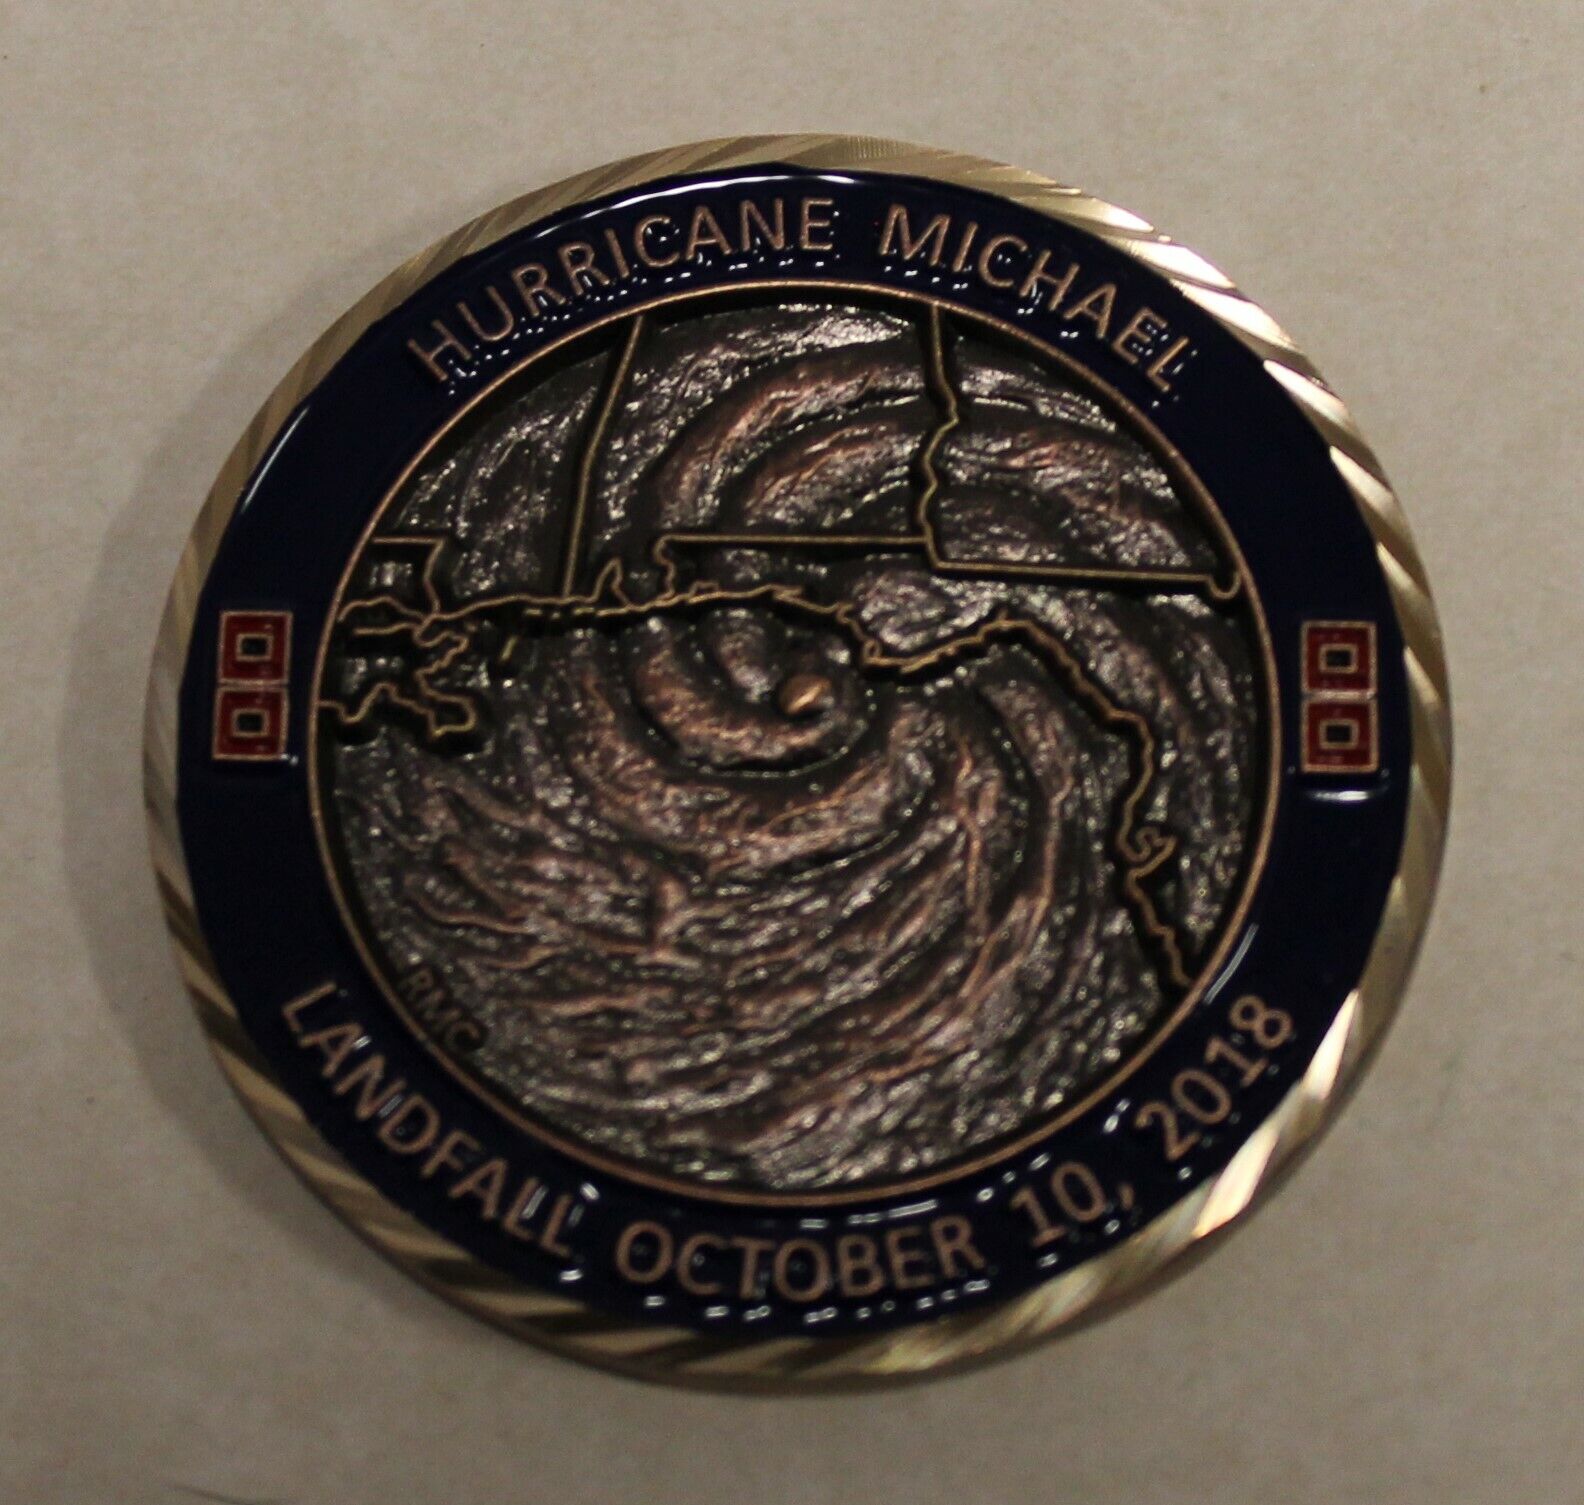 Hurricane Michael Emerald Gulf Coast True Grit Antque Copper Challenge Coin